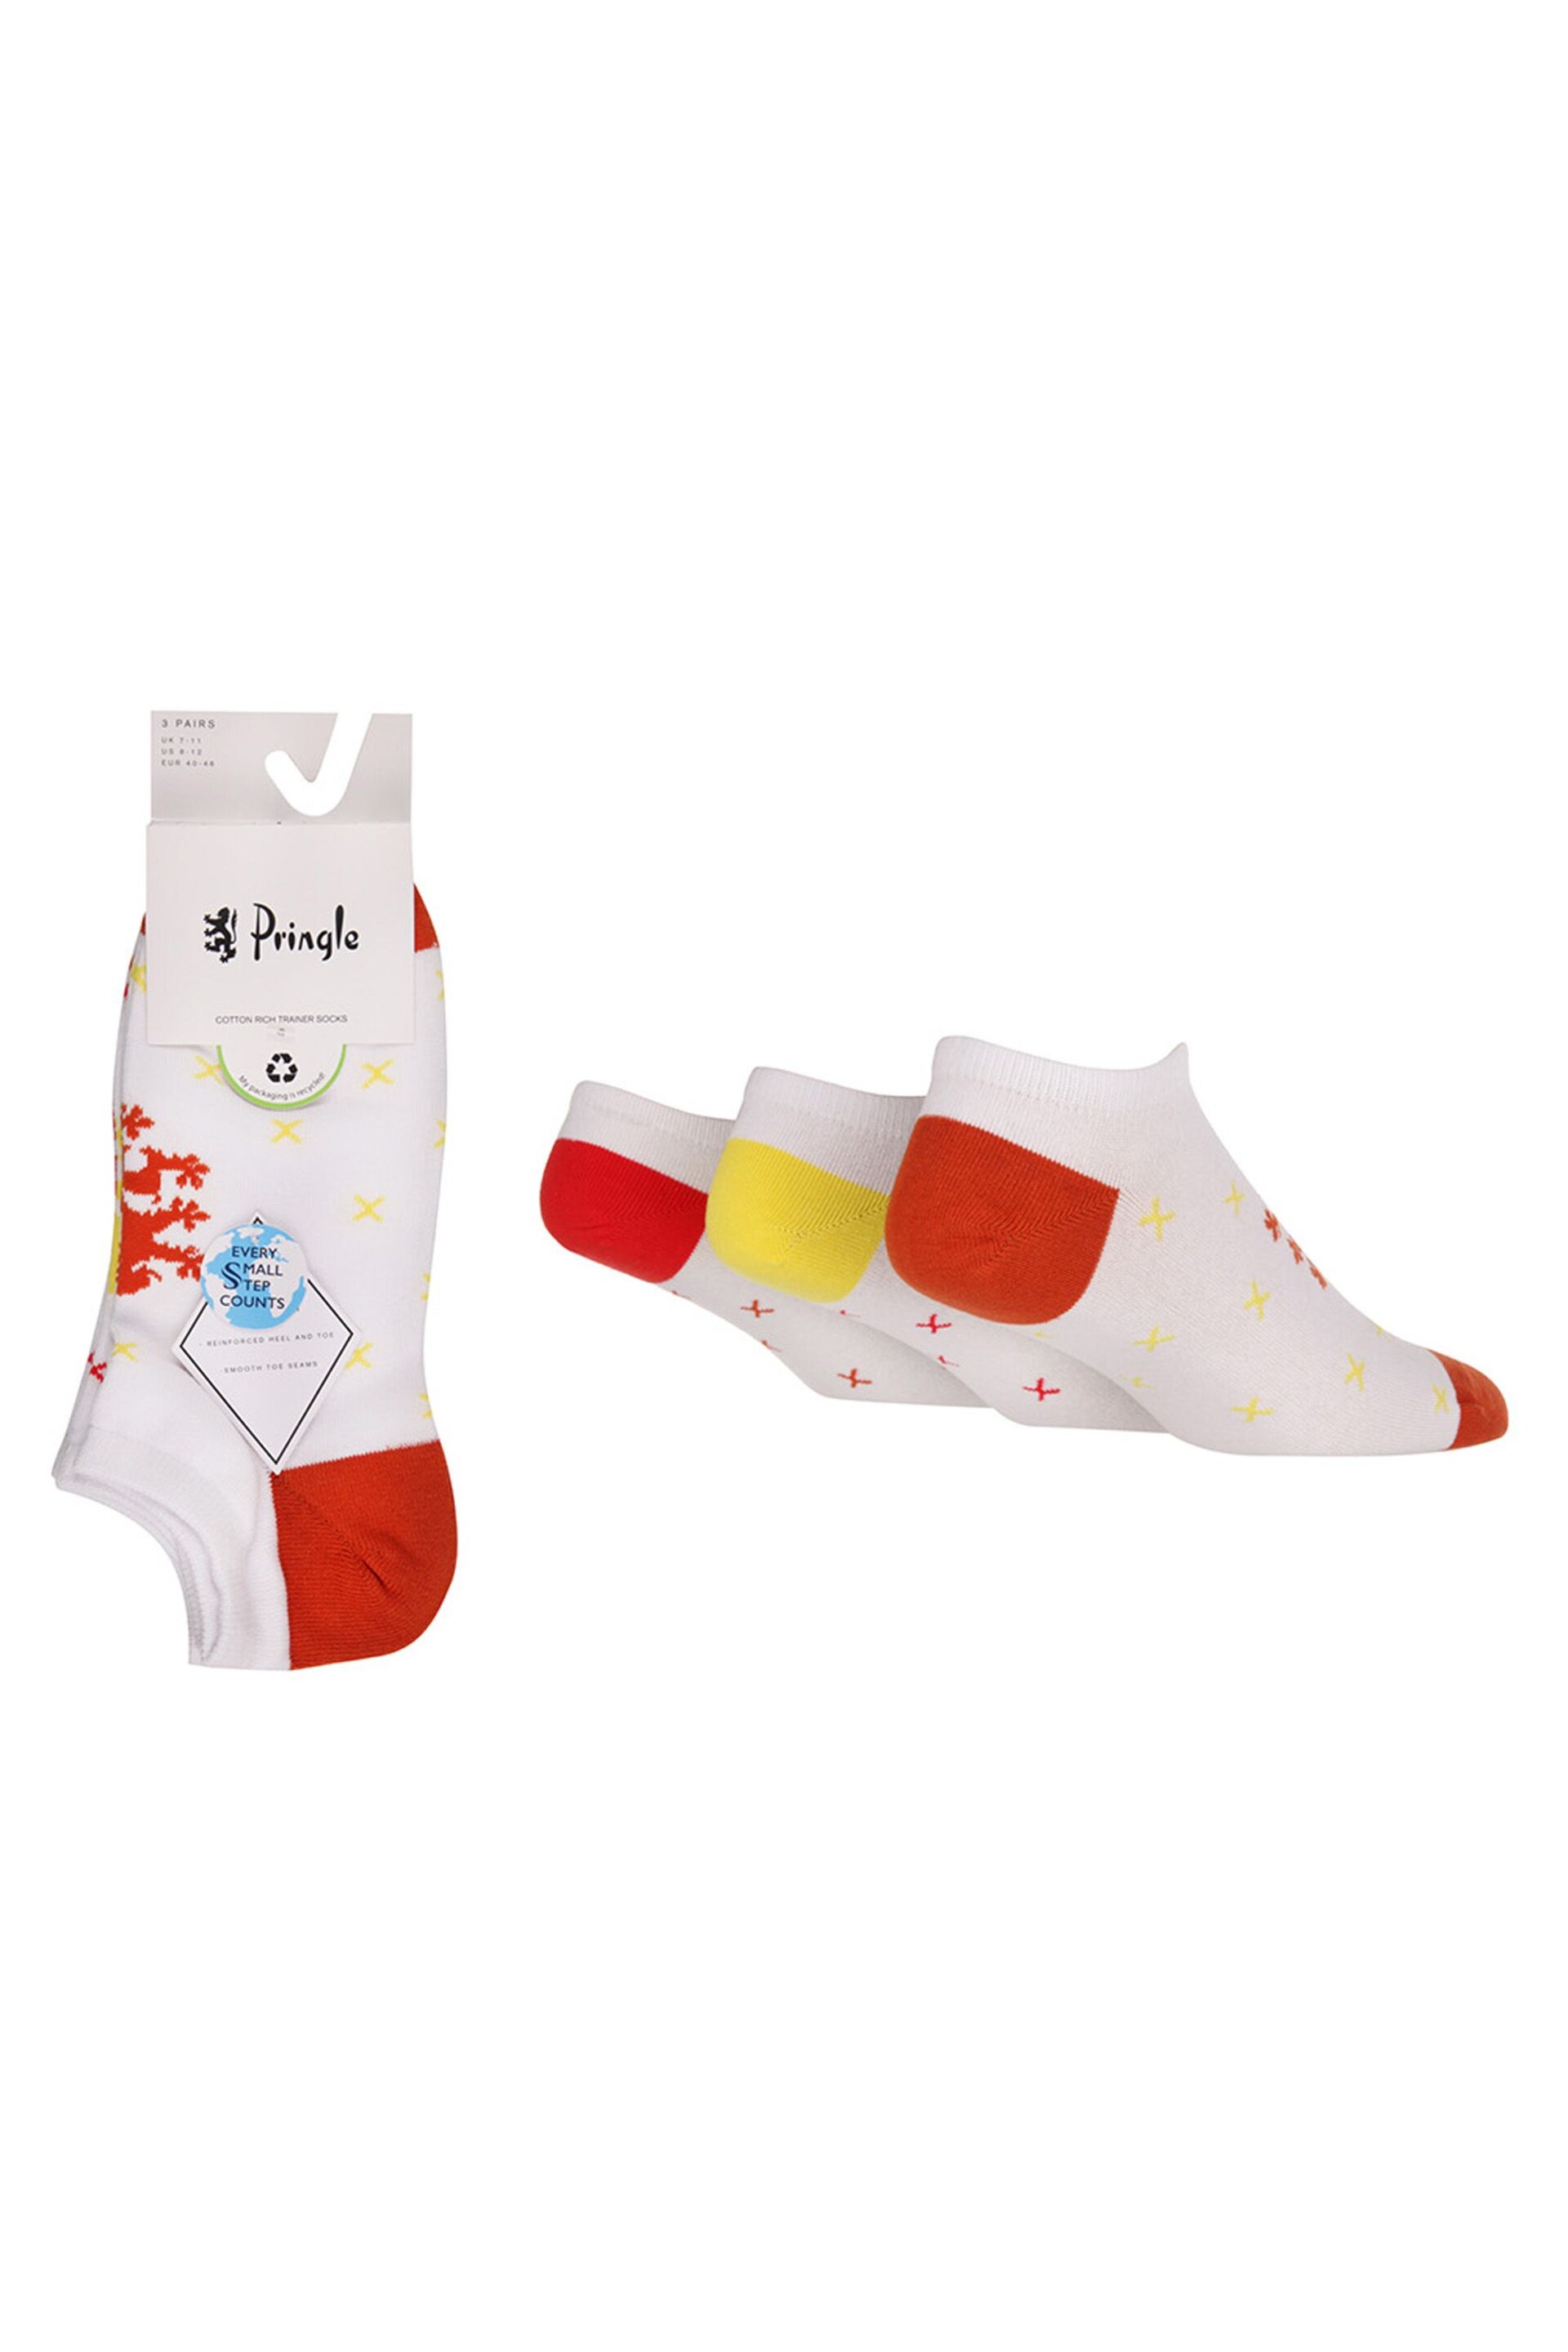 Pringle White Pop Colour Low Cut Trainer Socks - Image 1 of 4